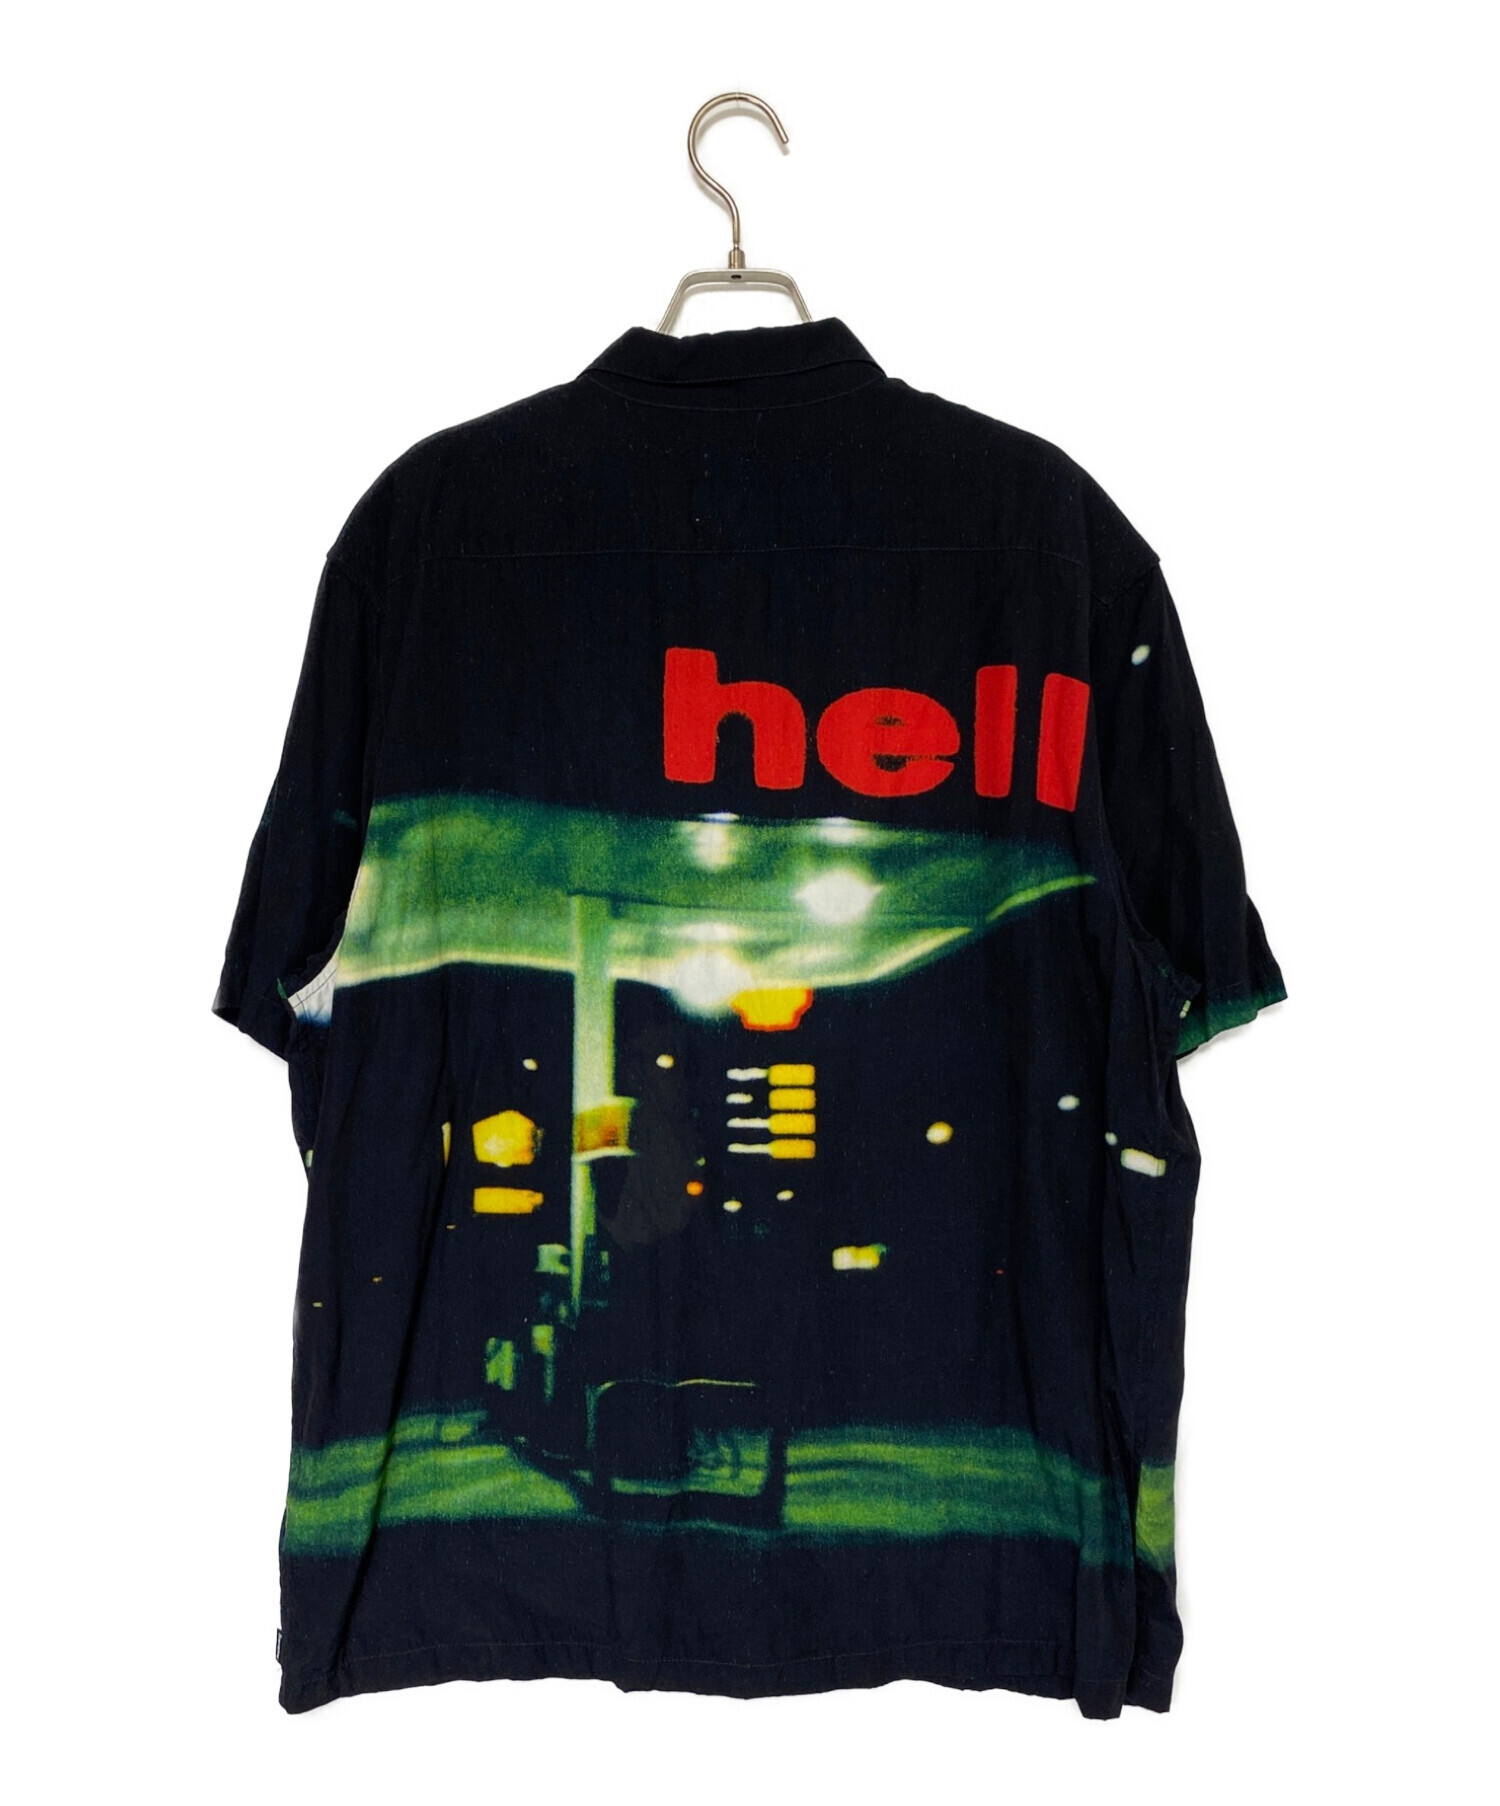 Supreme Hell S/S Shirt シャツ素材レーヨン